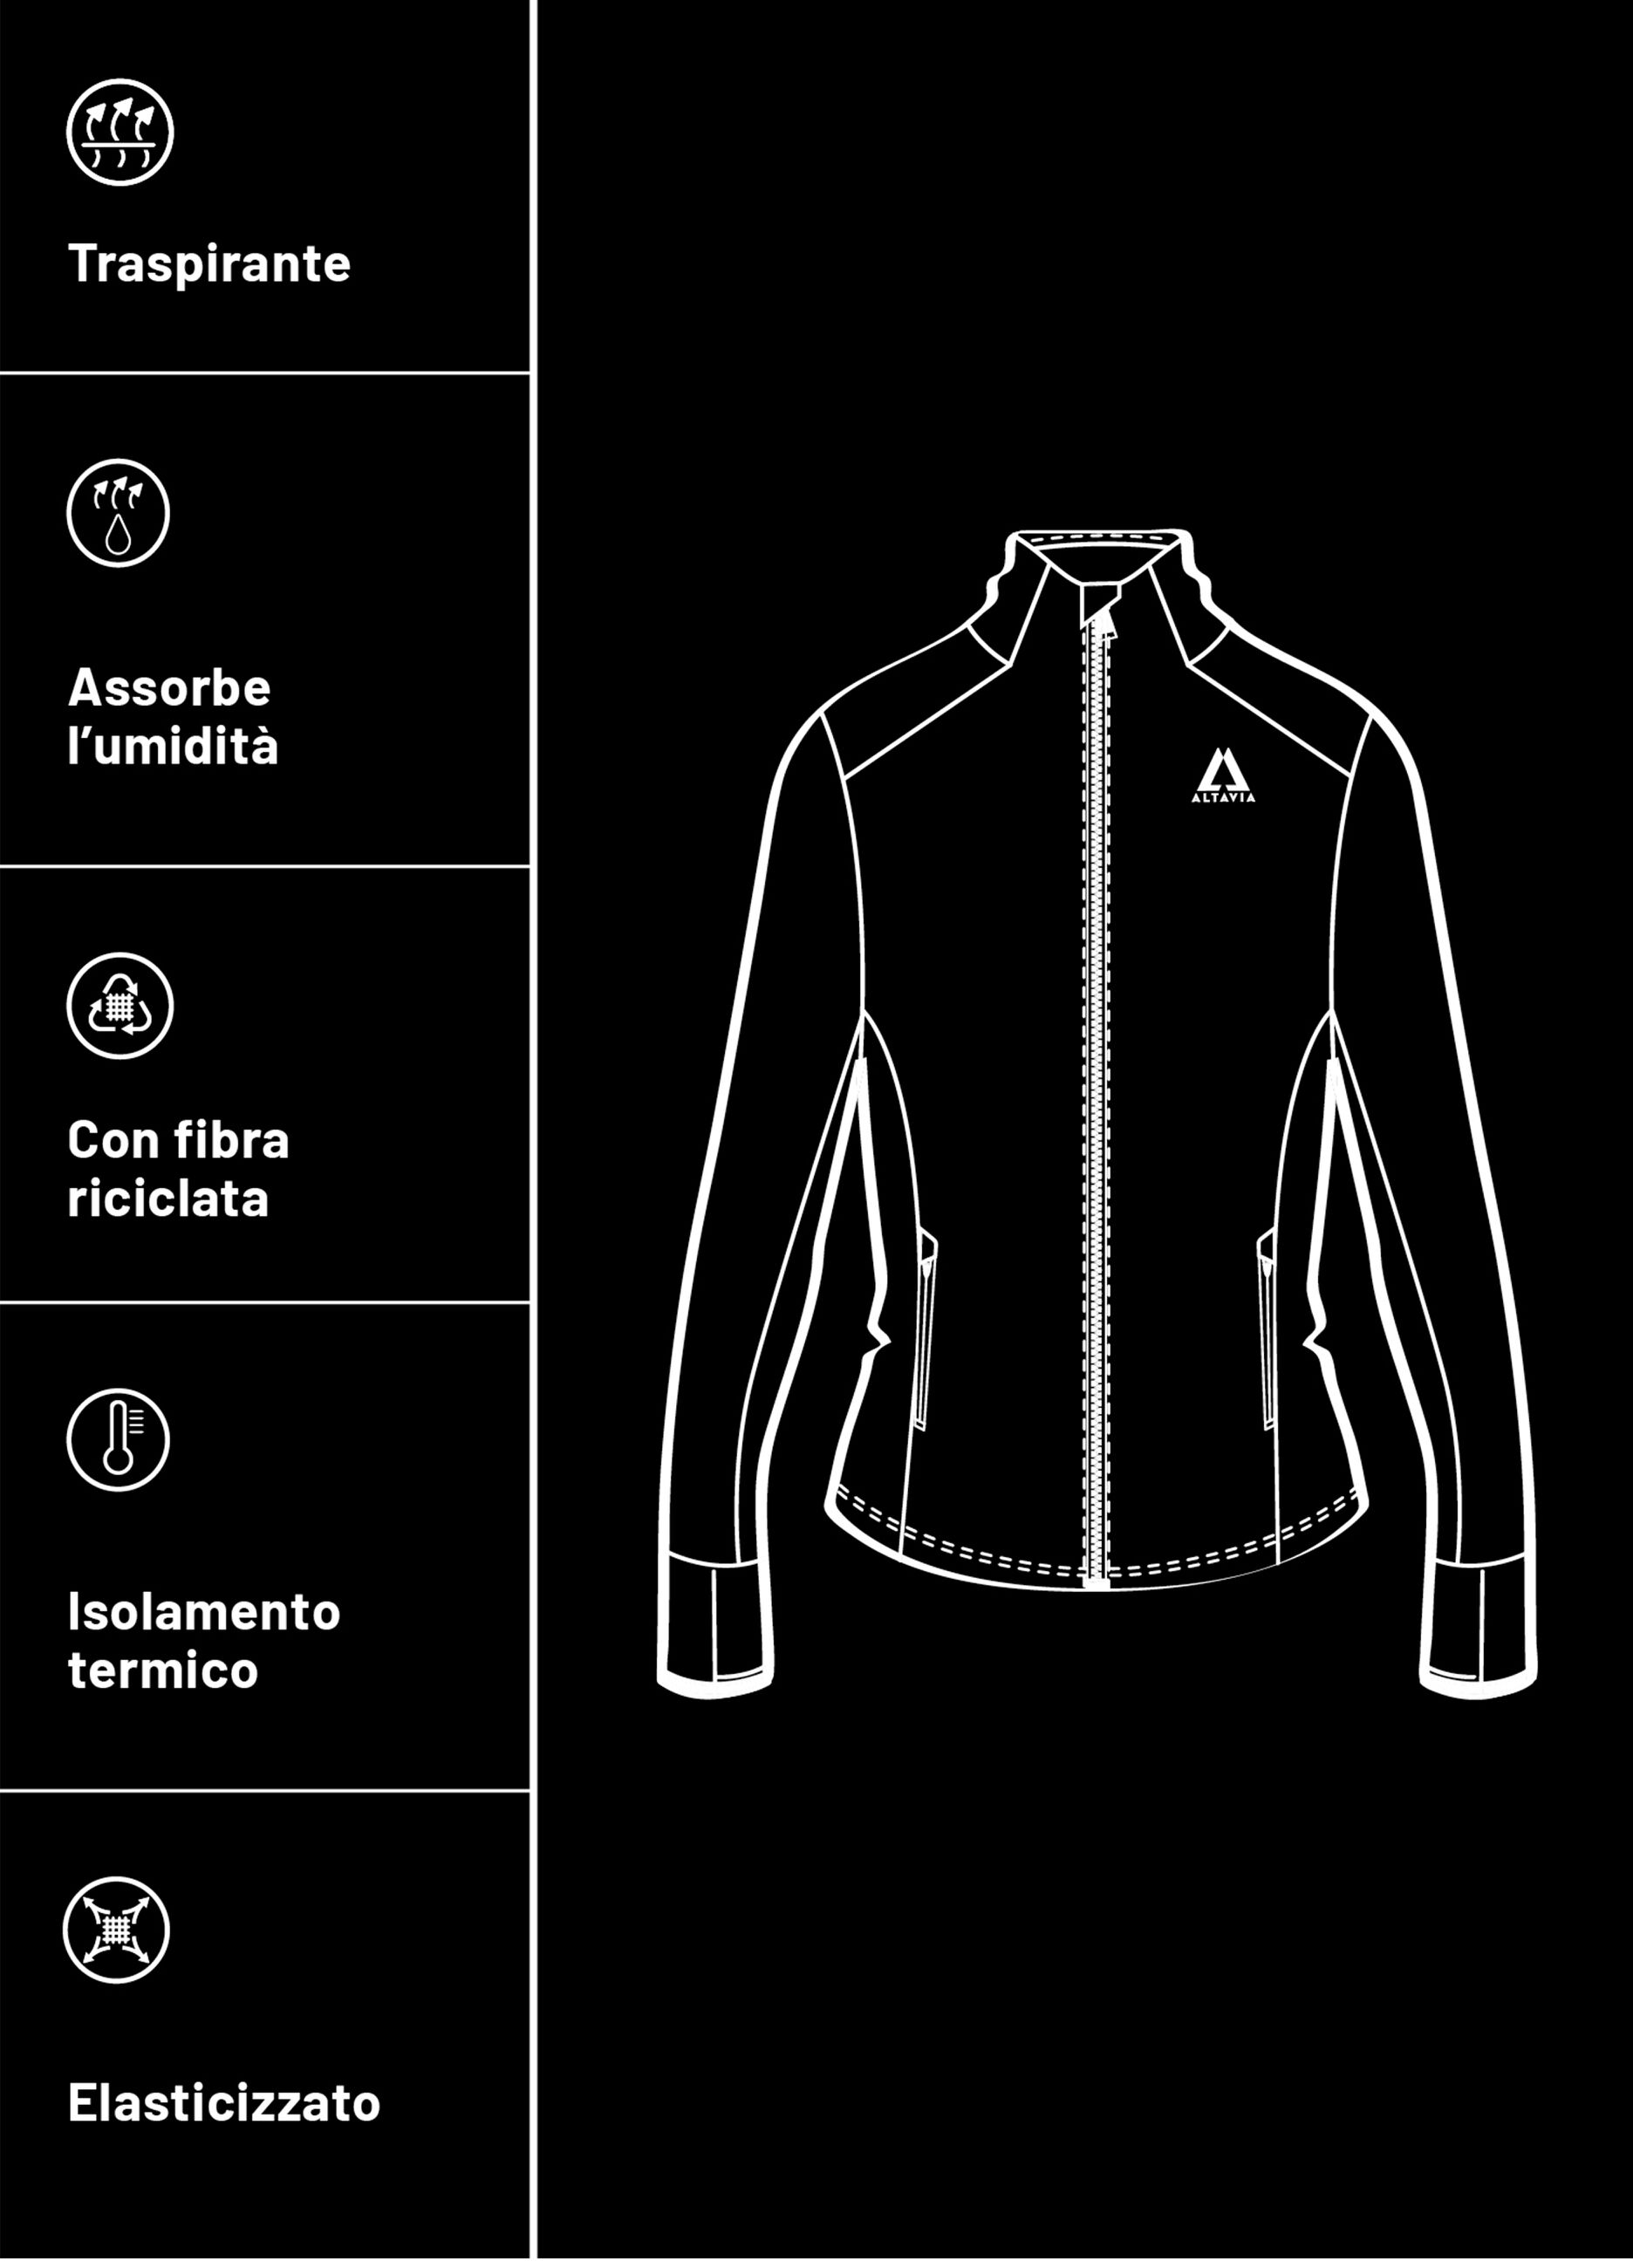 Altavia full-zip sweatshirt with high neck in technical fabric